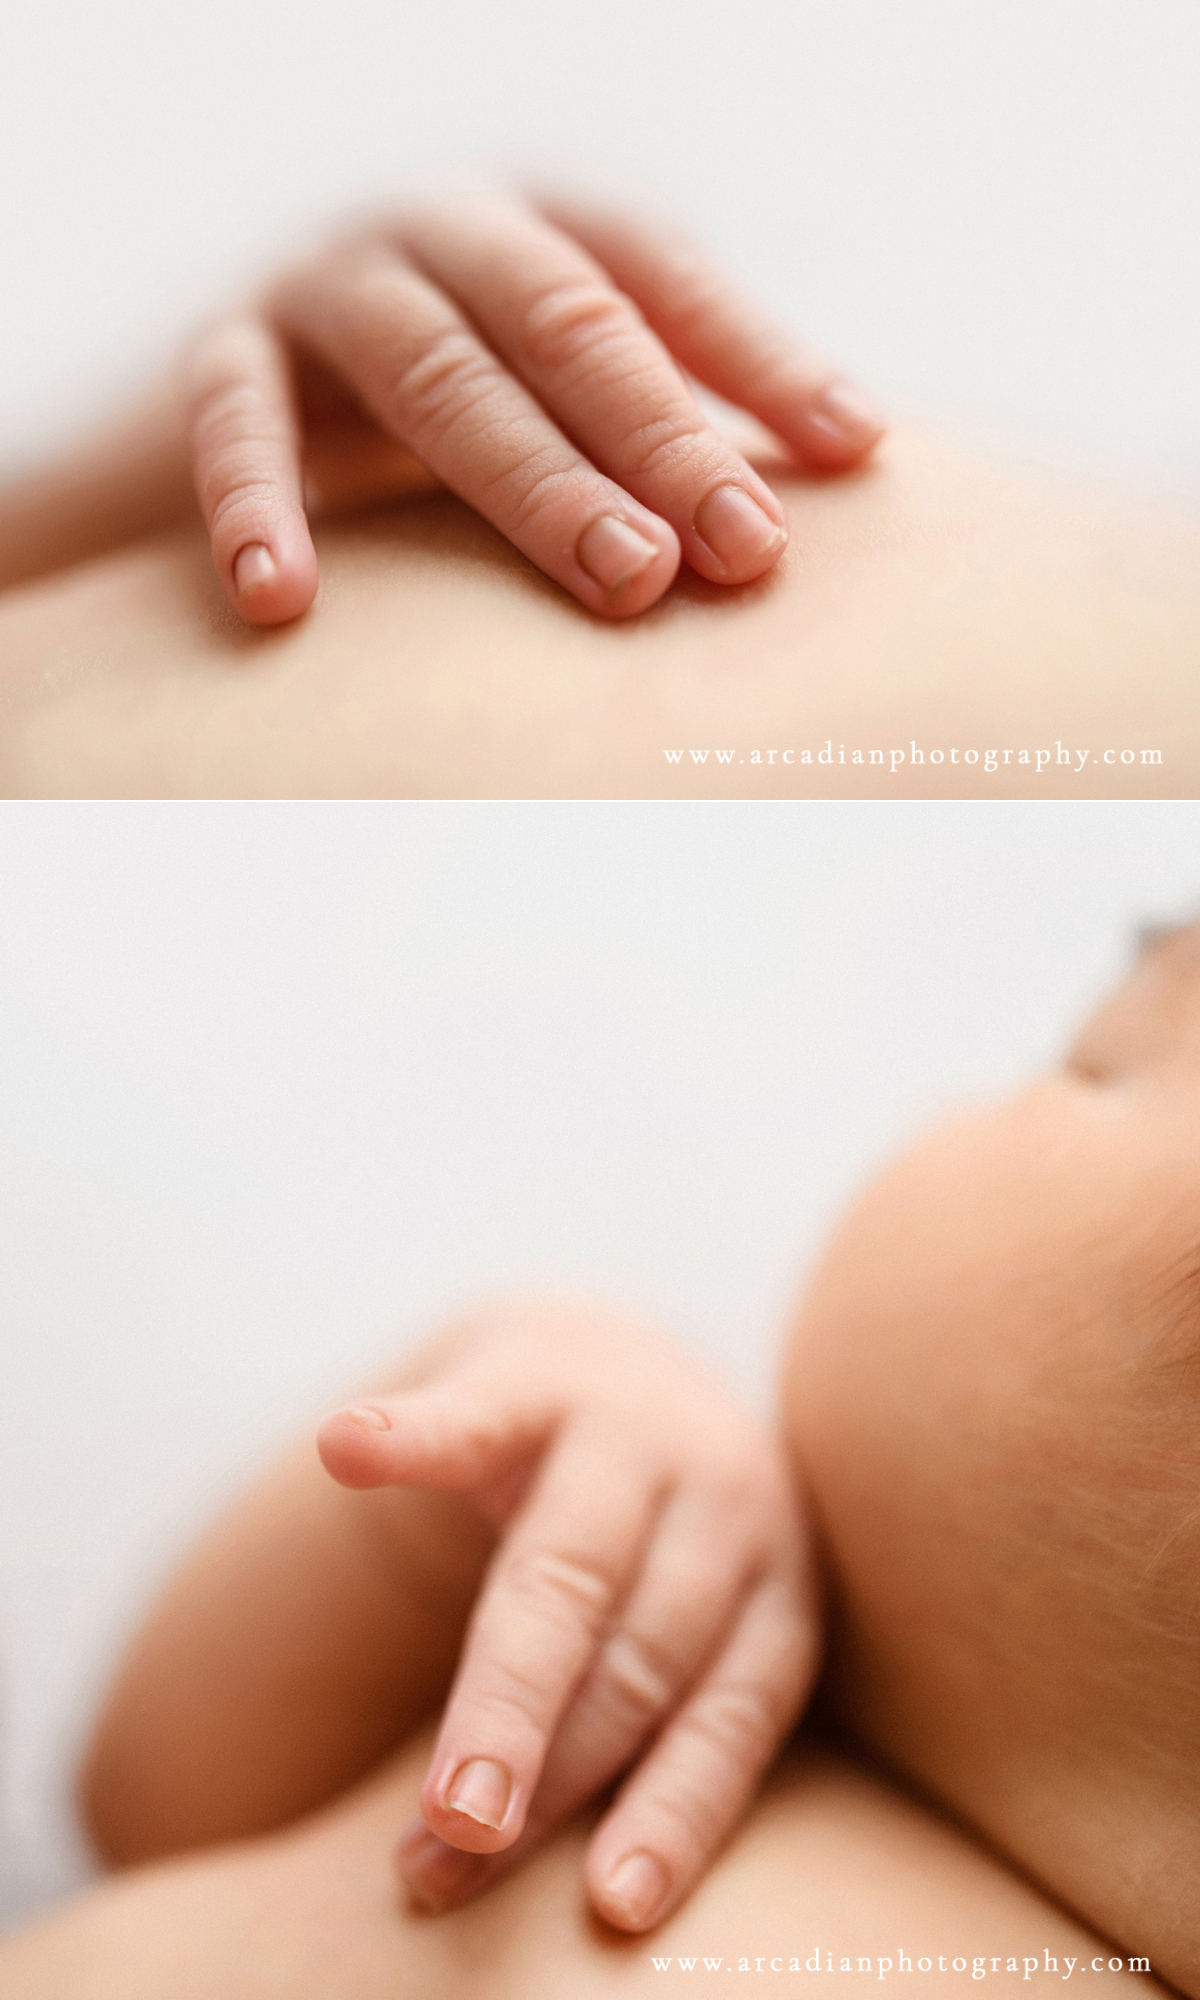 Newborn details - tiny fingers.